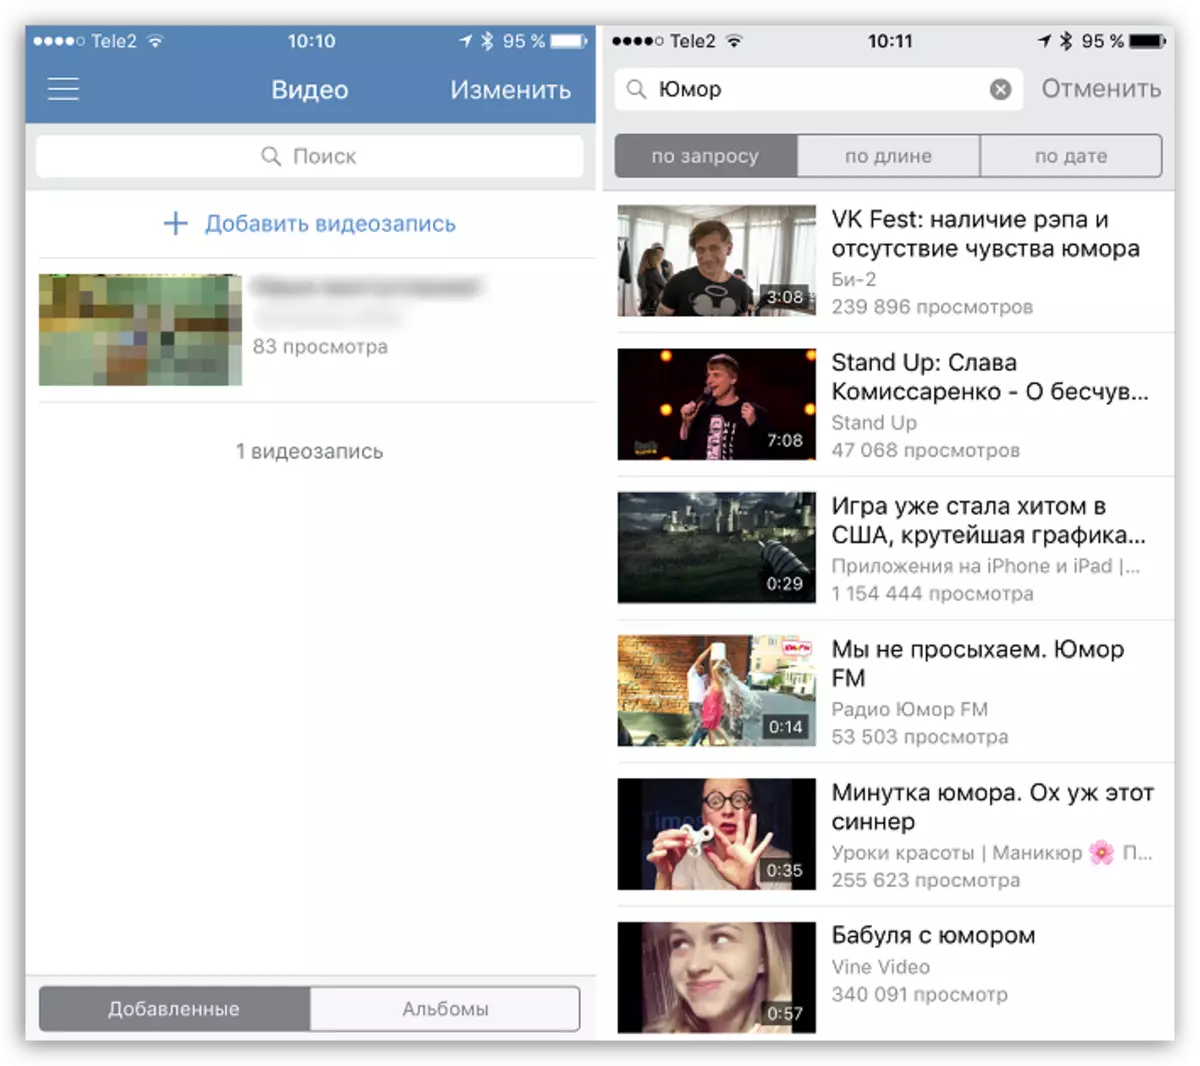 Video a Vkontakte per iOS